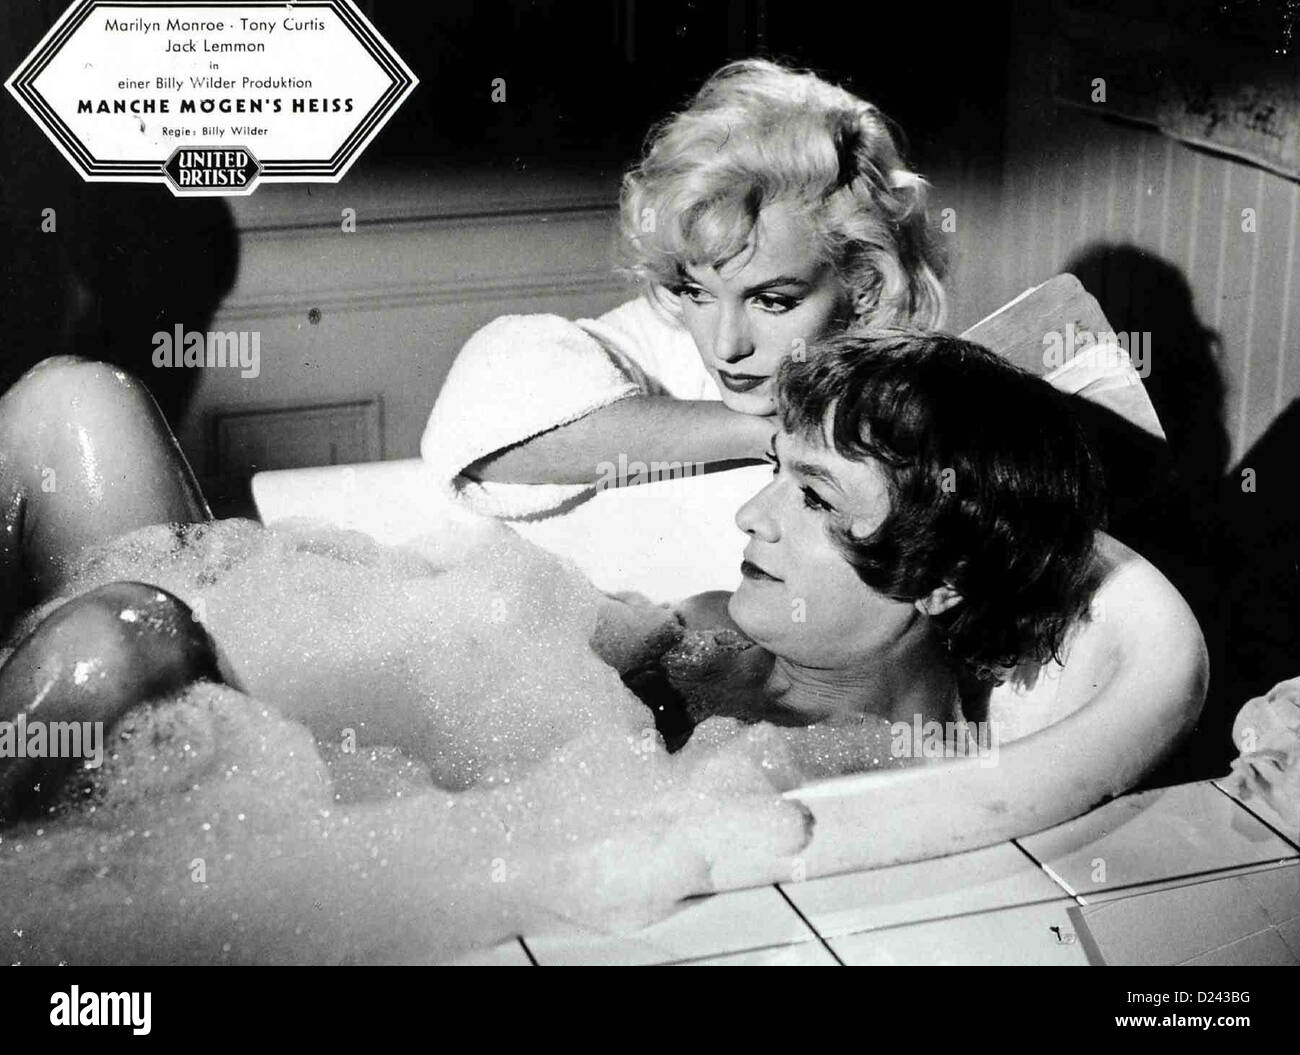 Manche Moegen's Heiss a qualcuno piace caldo Marilyn Monroe, Tony Curtis.Caption locale *** 1959 -- Foto Stock